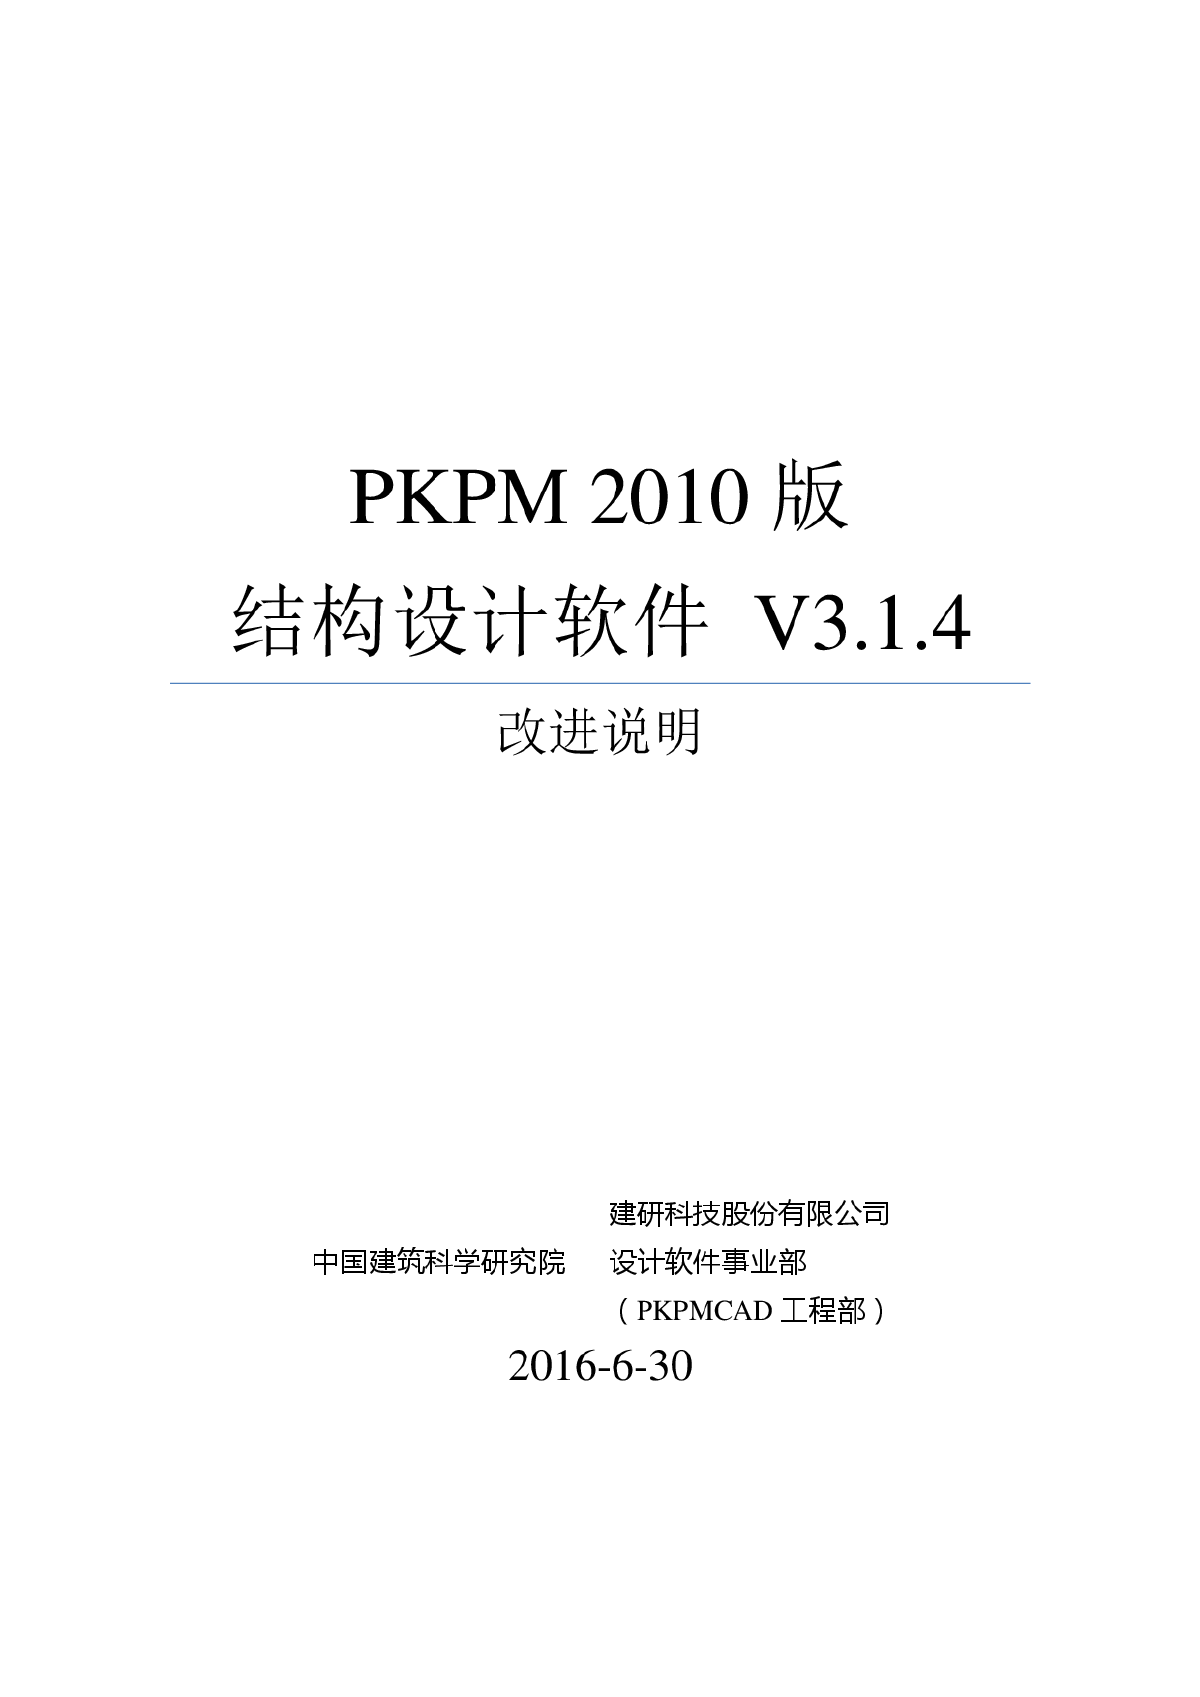 PKPM2010-V3.1.4版 改进说明-图一